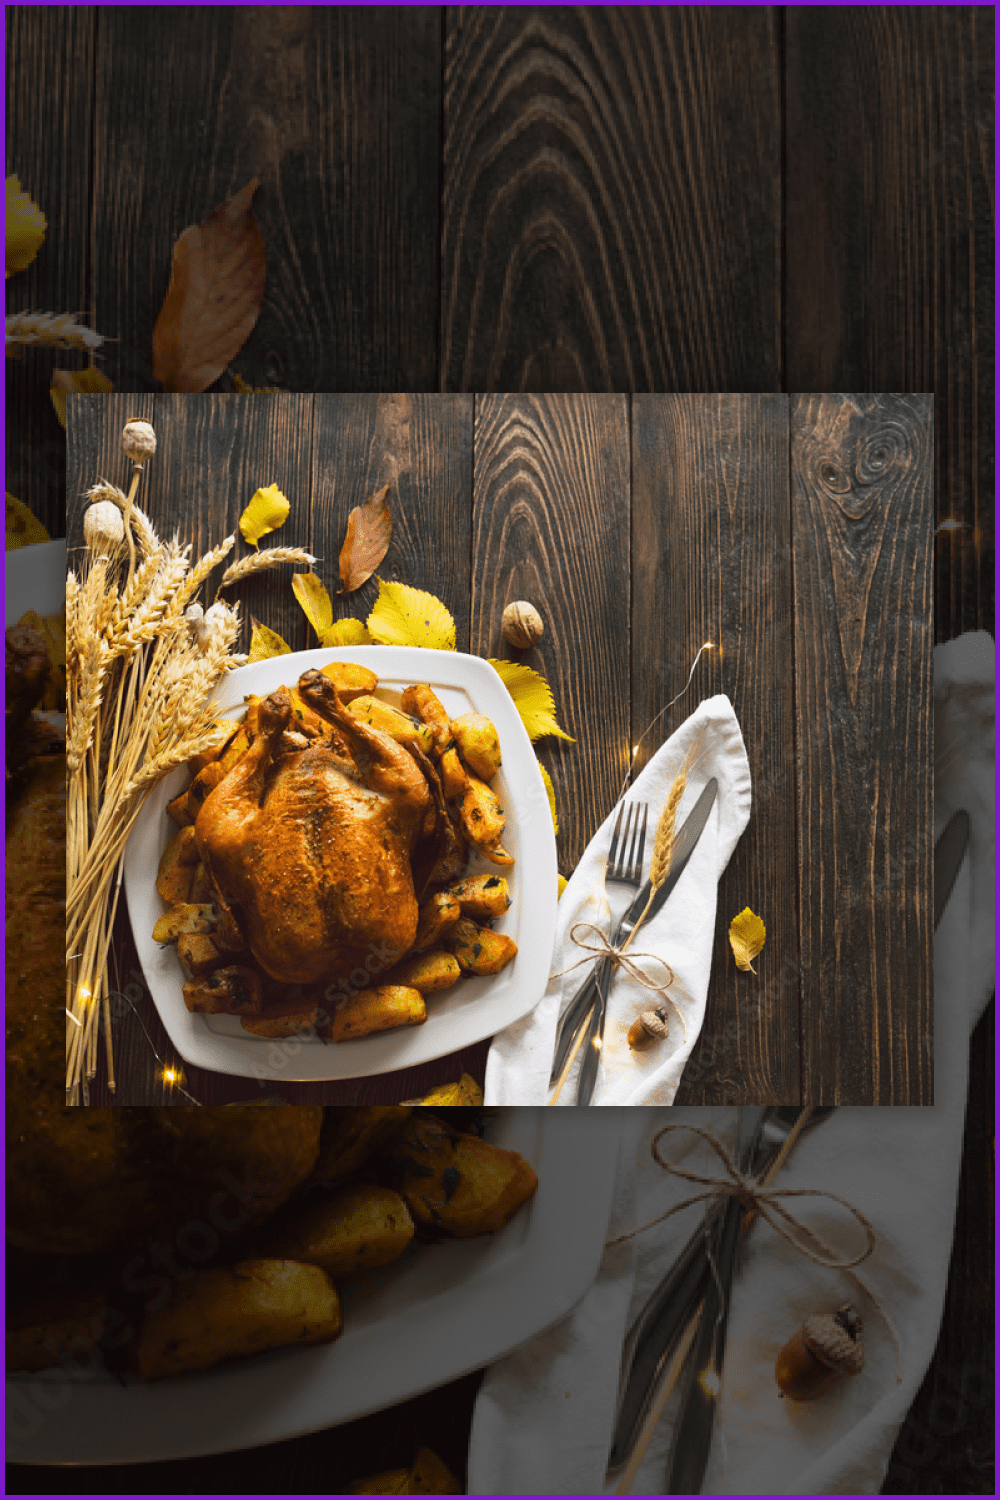 A roasted turkey, golden tree leaves, ears of grain on a dark wooden background.